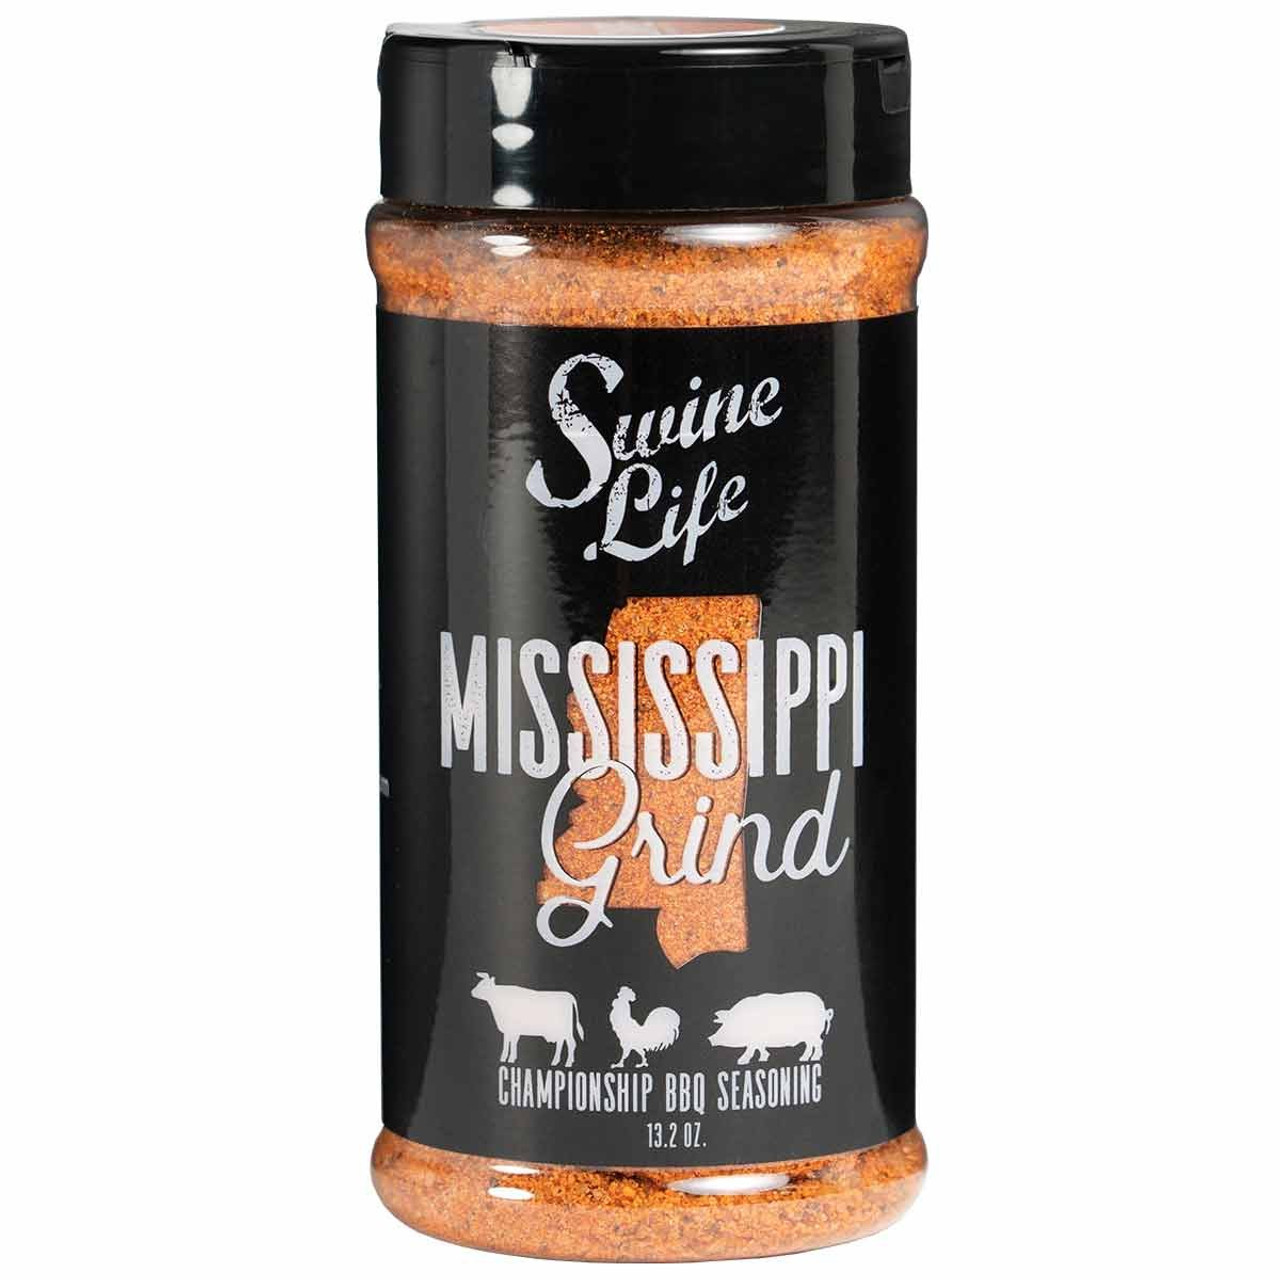 Swine Life Mississippi Grind